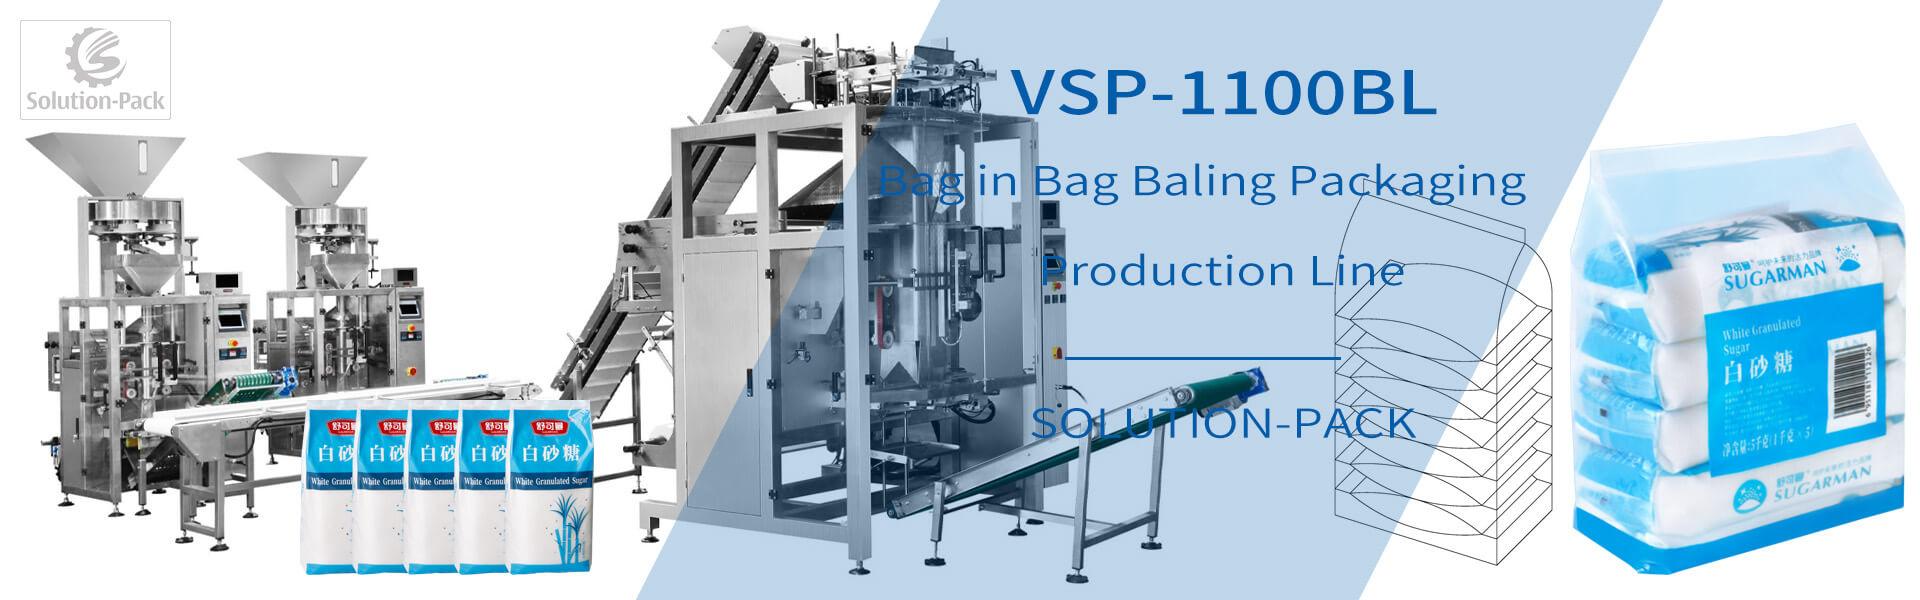 Solution-Pack | VSP-1100BL Bag-in-Bag Baling Packaging Machine Production Line Heading Banner Picture| Bag-in-Bag Packing Machine | Small Bag Pack into Big Bag Production Line | Bag-in-Bag Baling Packing Machine